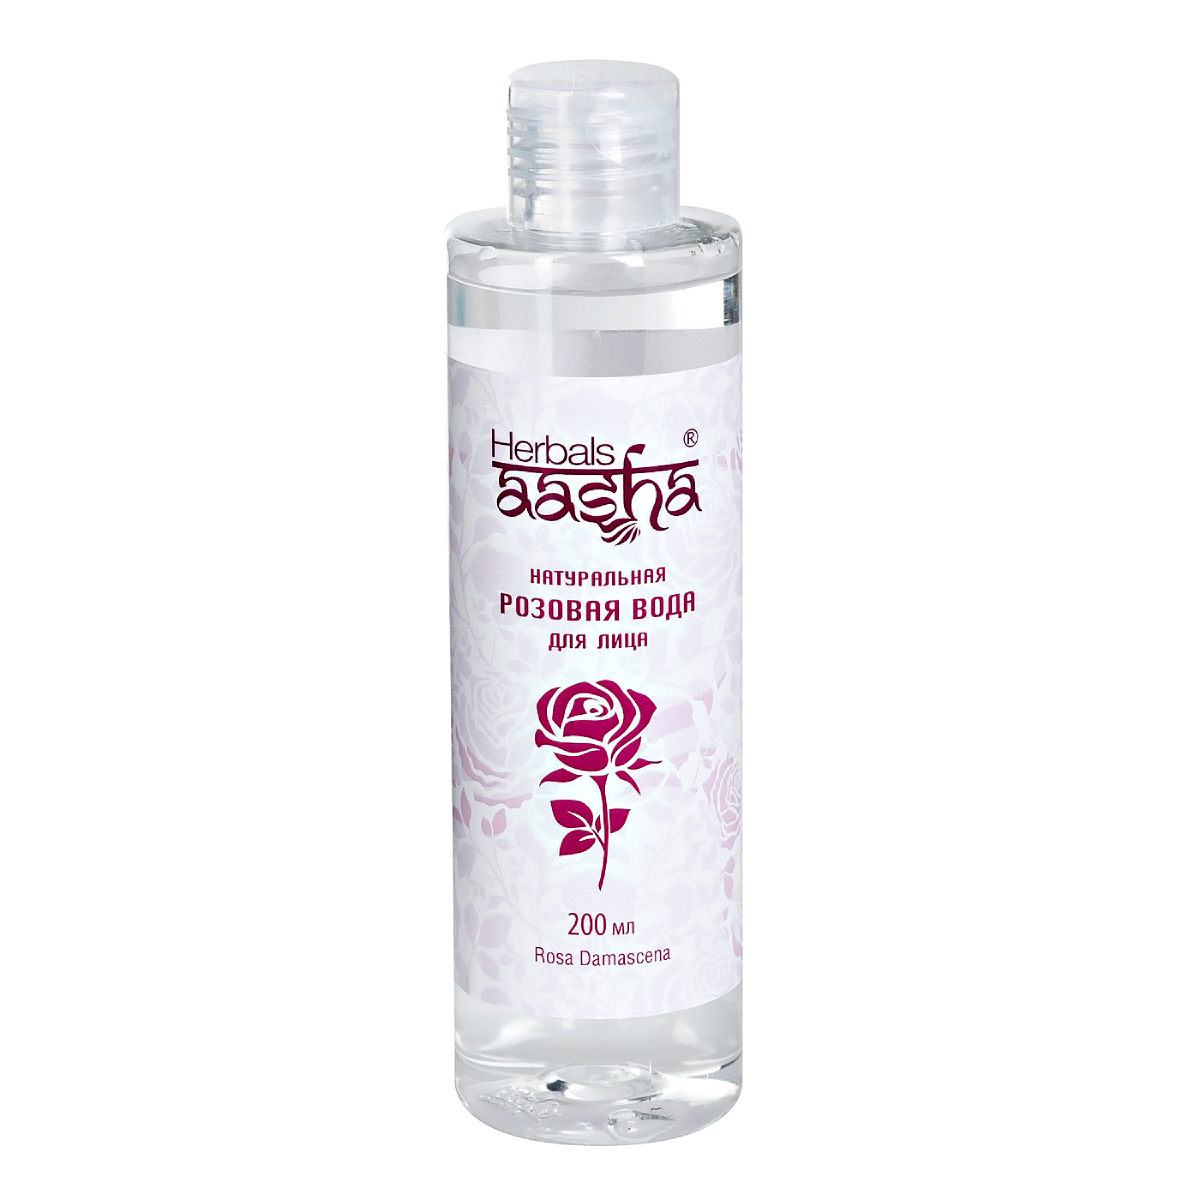 Натуральная розовая вода Aasha Herbals для лица, 200 мл aasha herbals очная вода шафран 100